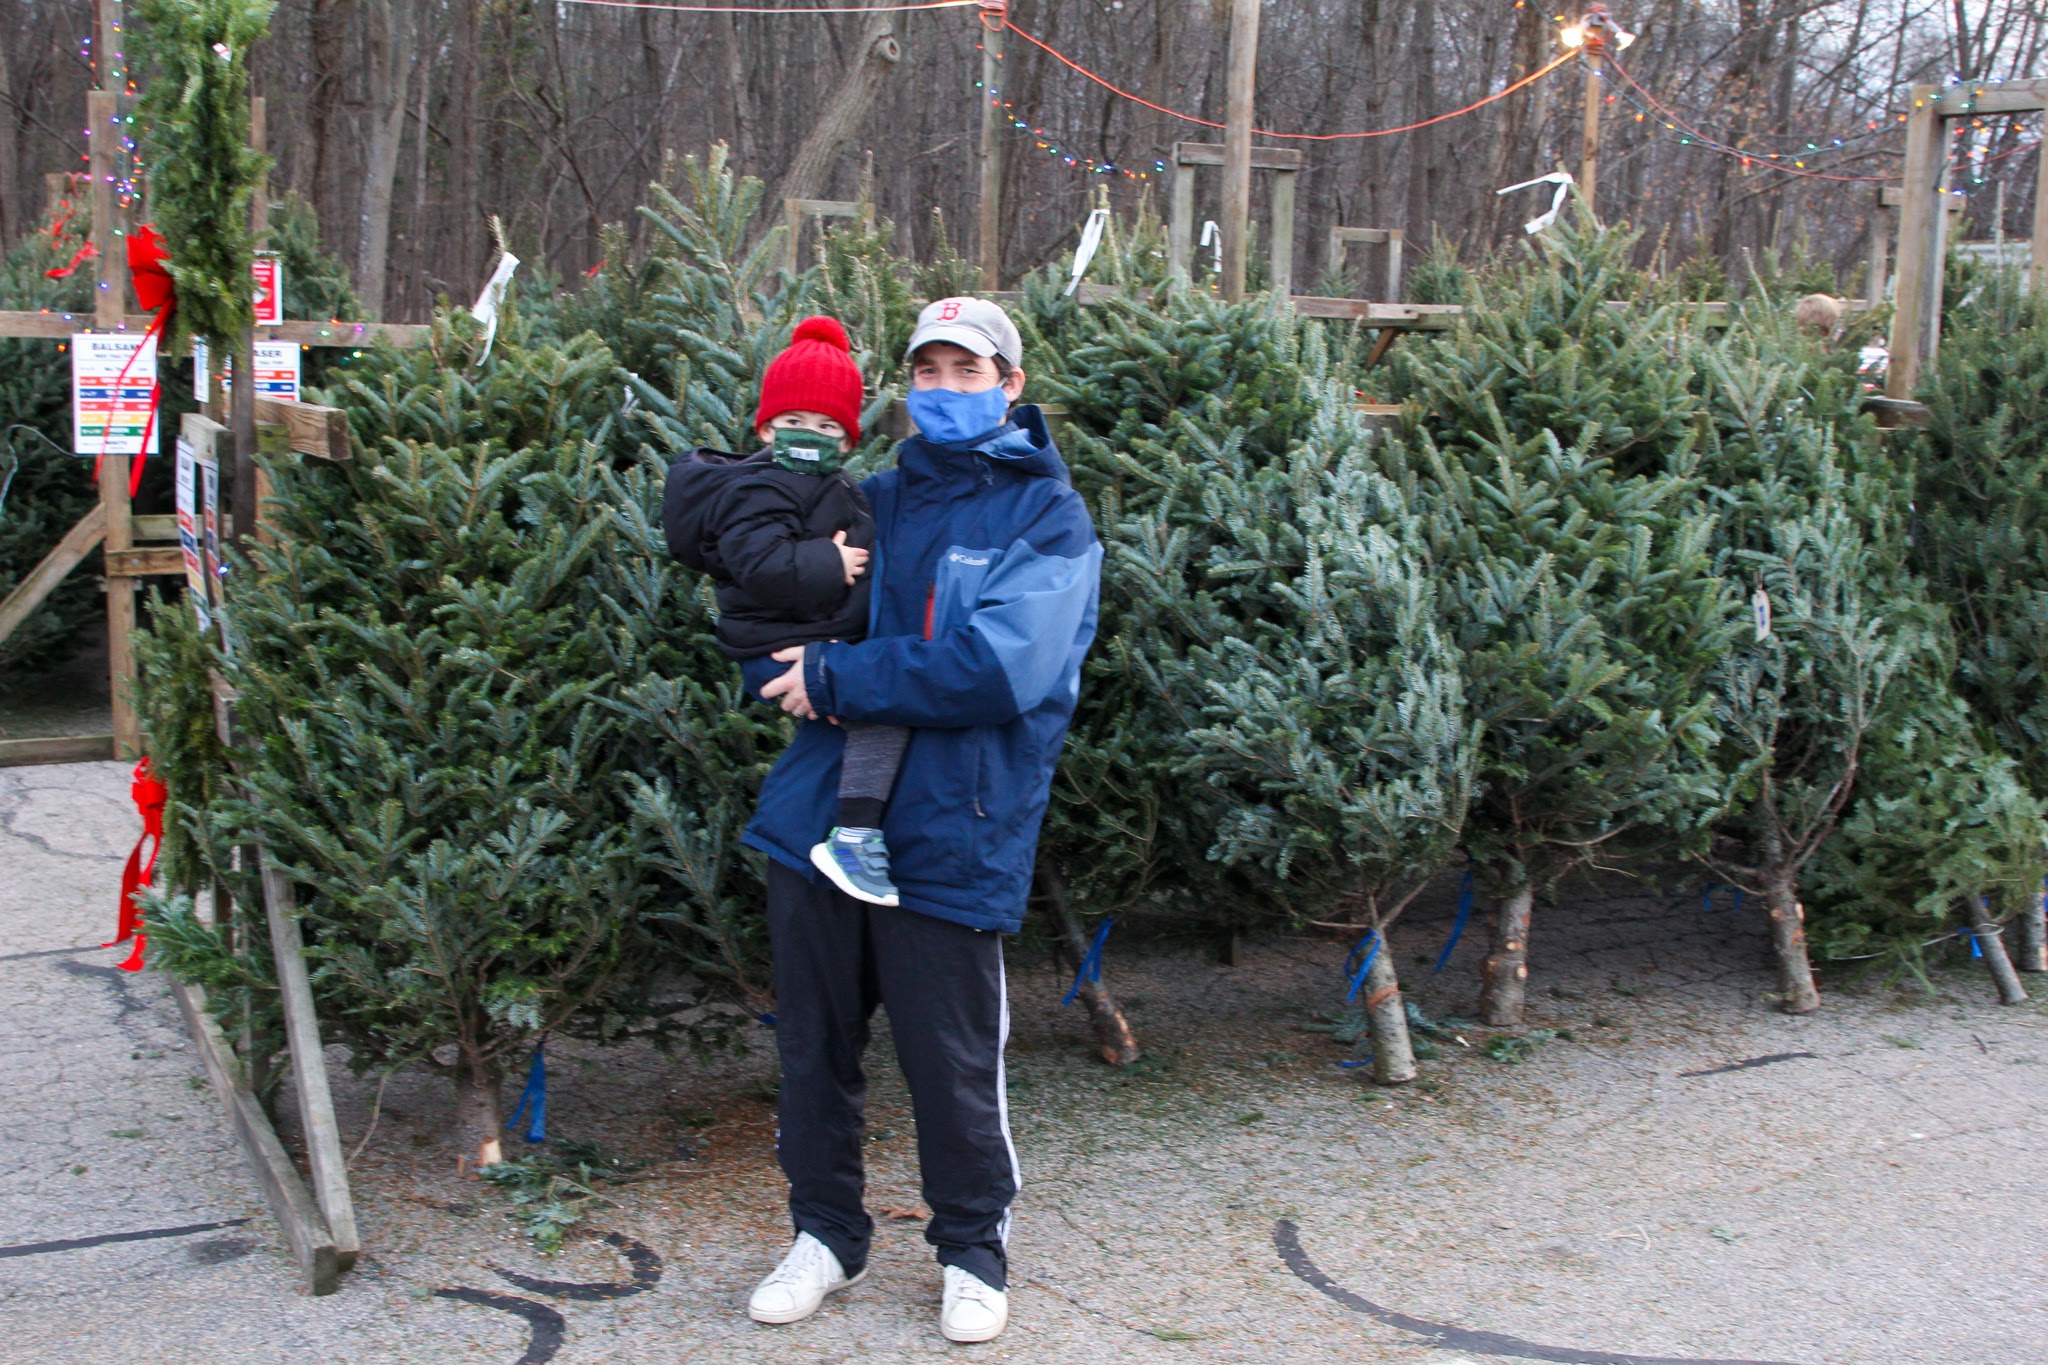 Photos: Boy Scouts Christmas tree sale